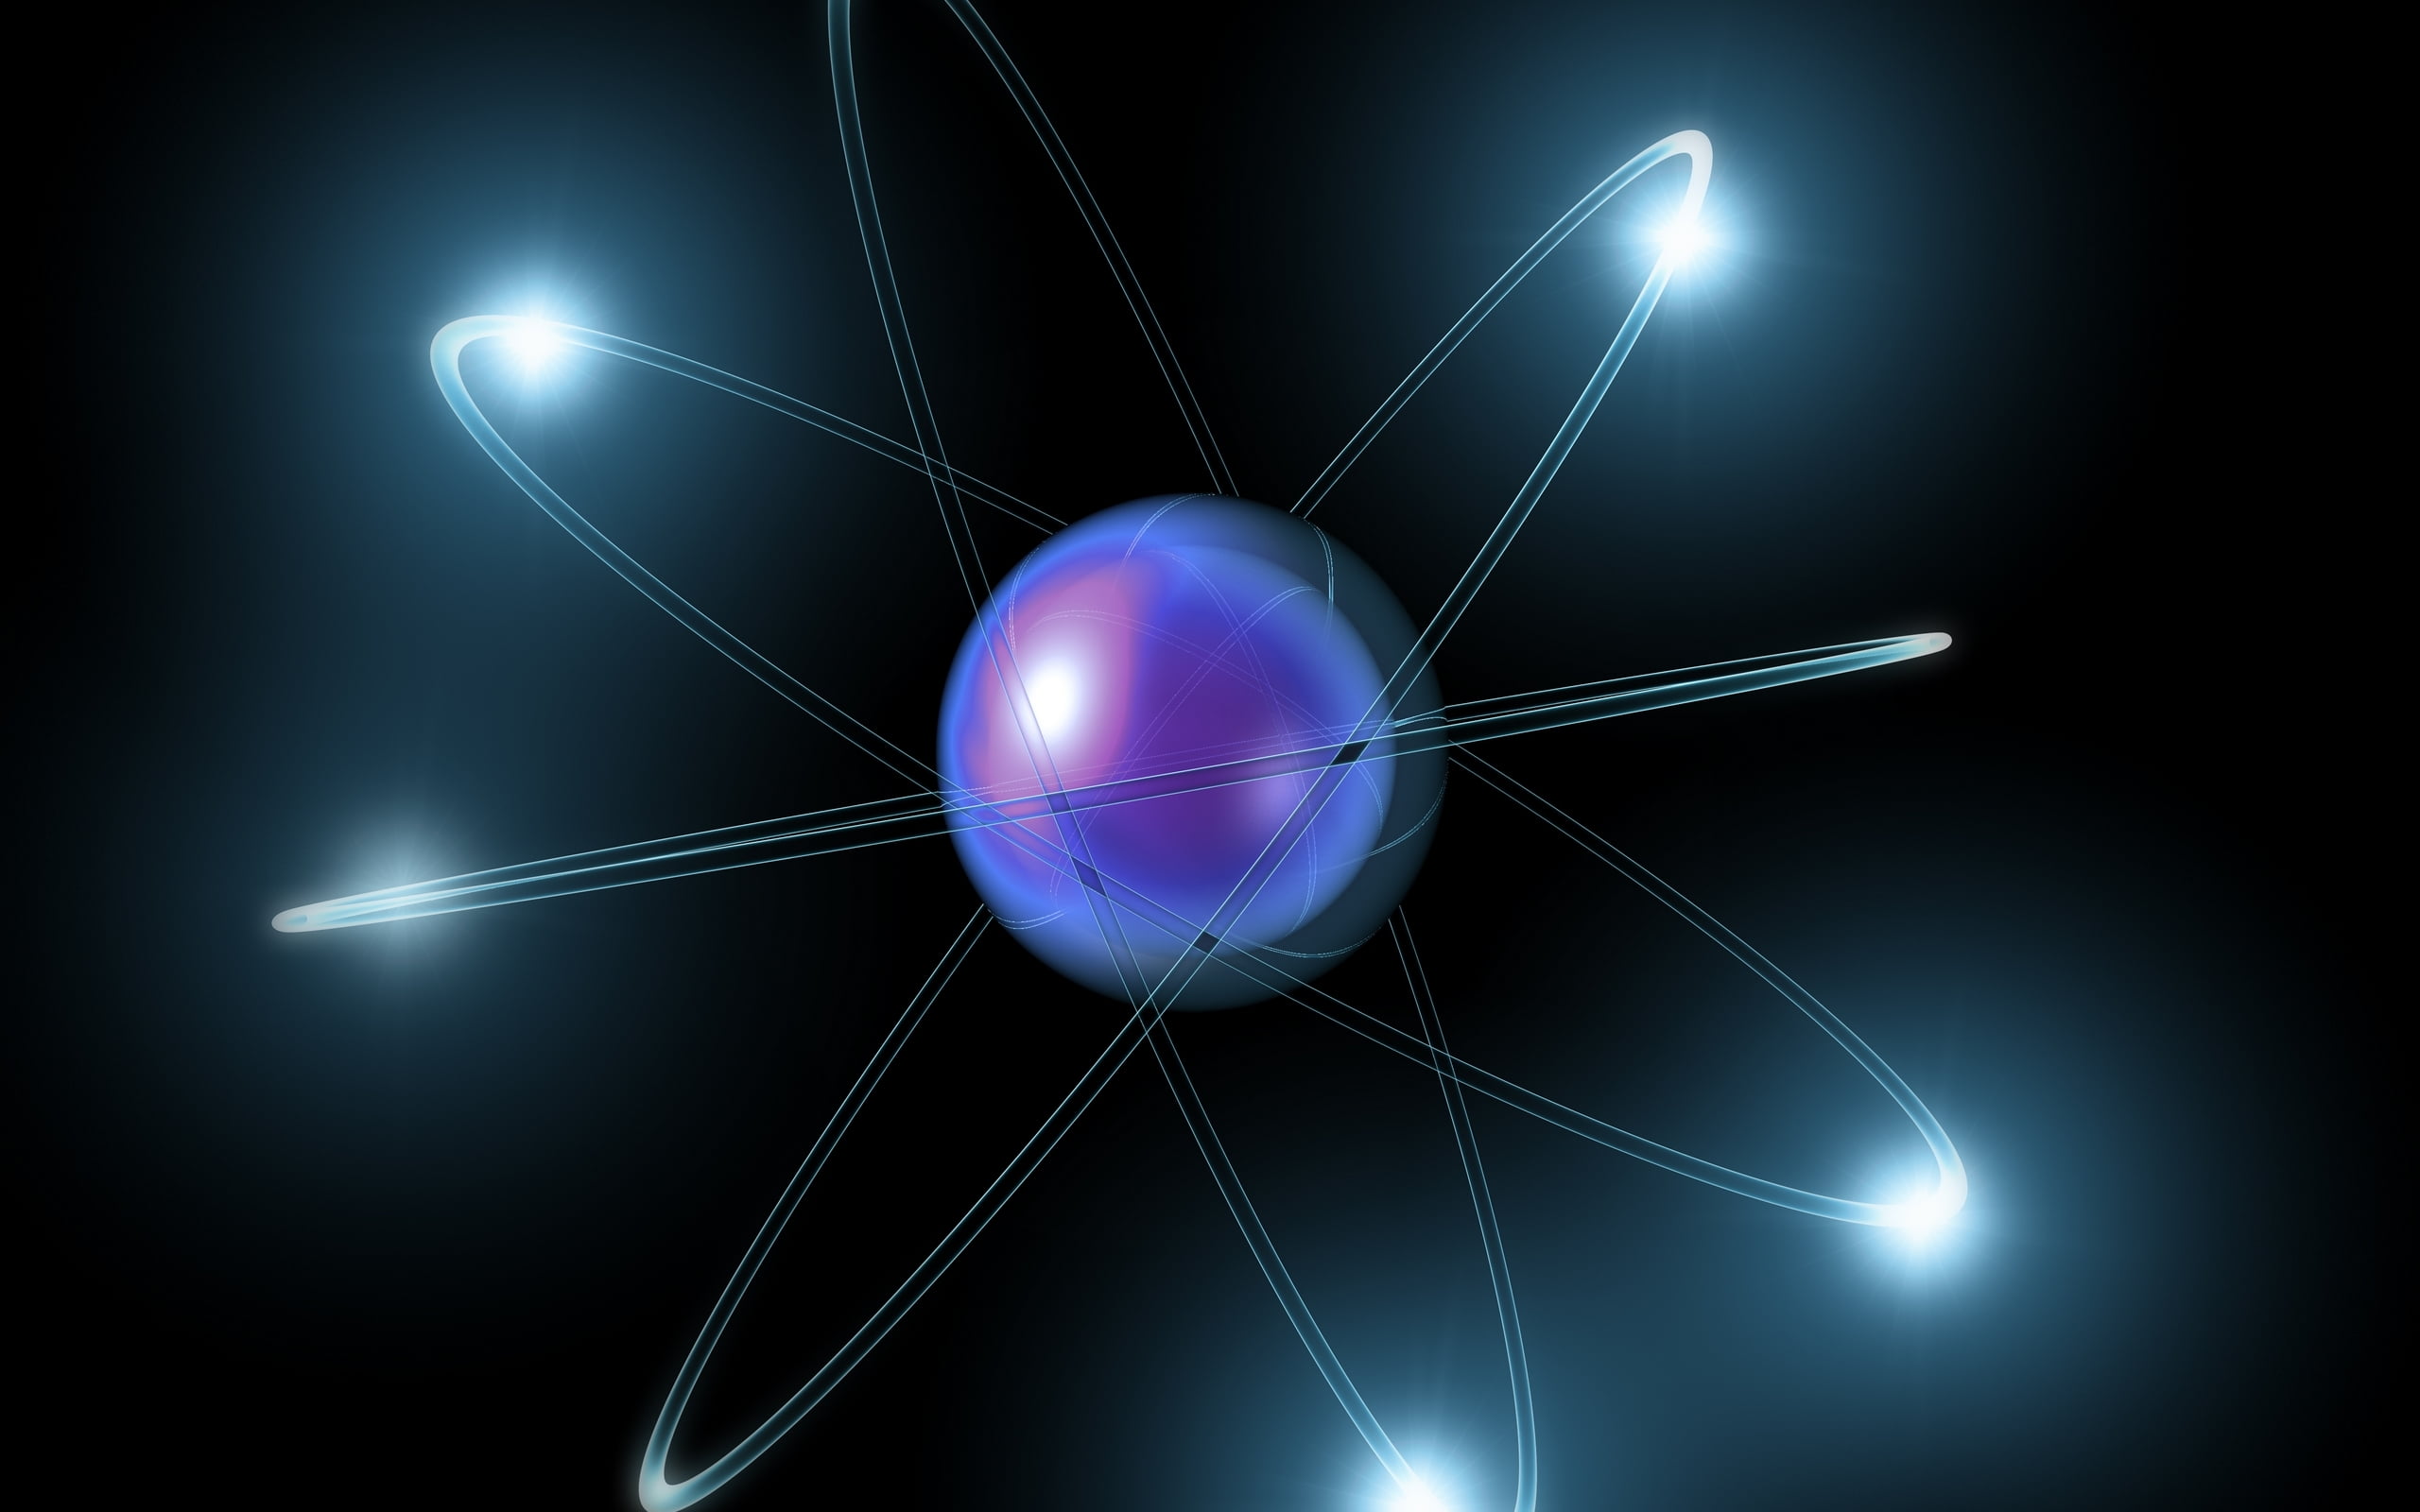 blue atom illustration, light, science, orbit, chemistry, physics